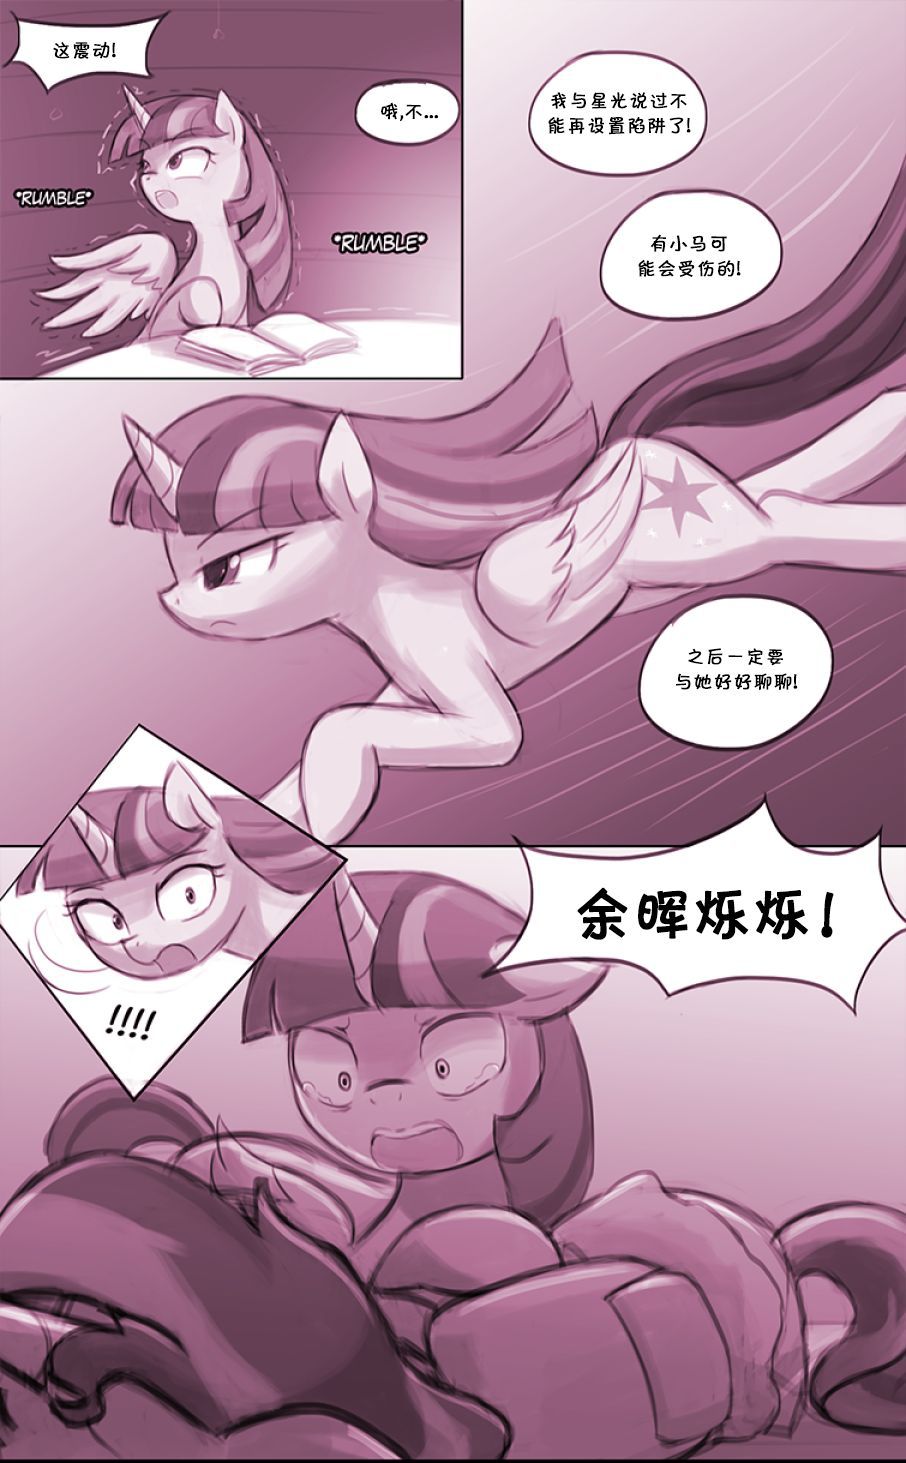 [Lumineko] Homesick | 吾心归处是吾乡 (My Little Pony: Friendship is Magic) [Chinese] [PhoenixTranslation] 【Lumineko】【PhoenixTranslation】Homesick 9